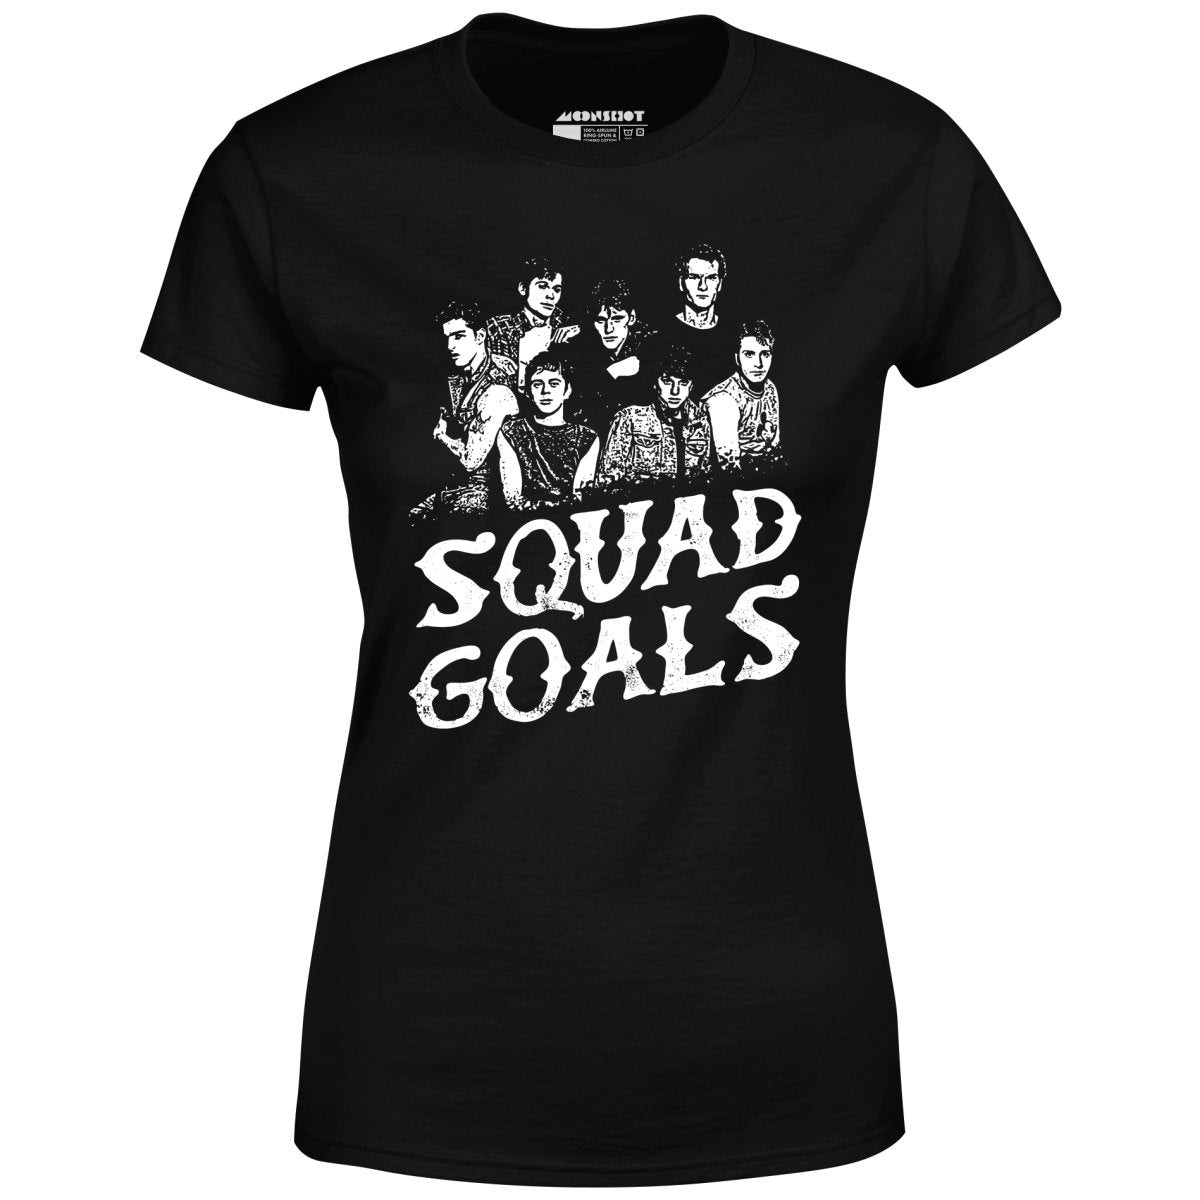 Squad Goals Outsiders - Women's T-Shirt